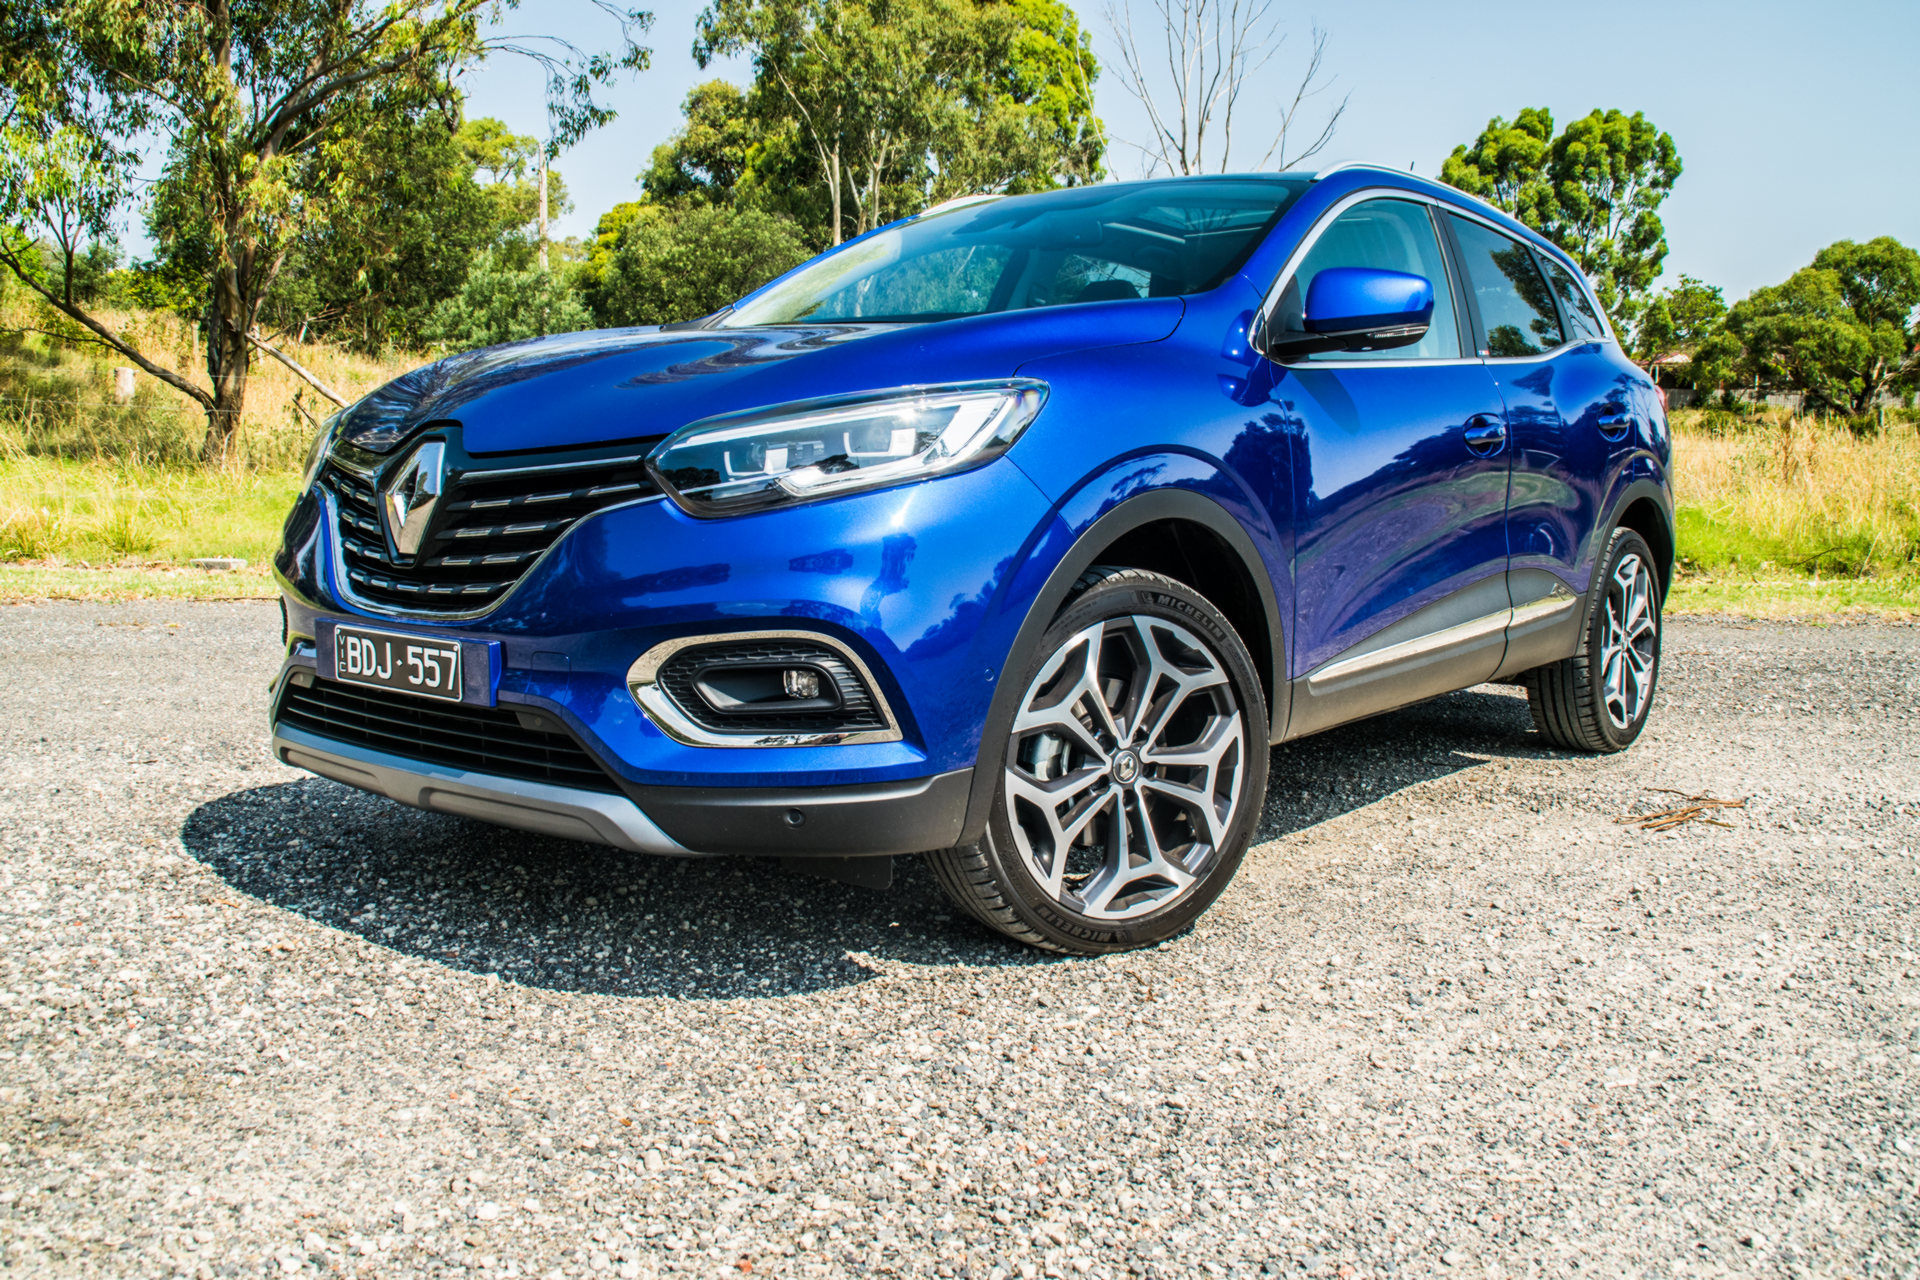 Renault Kadjar News and Reviews